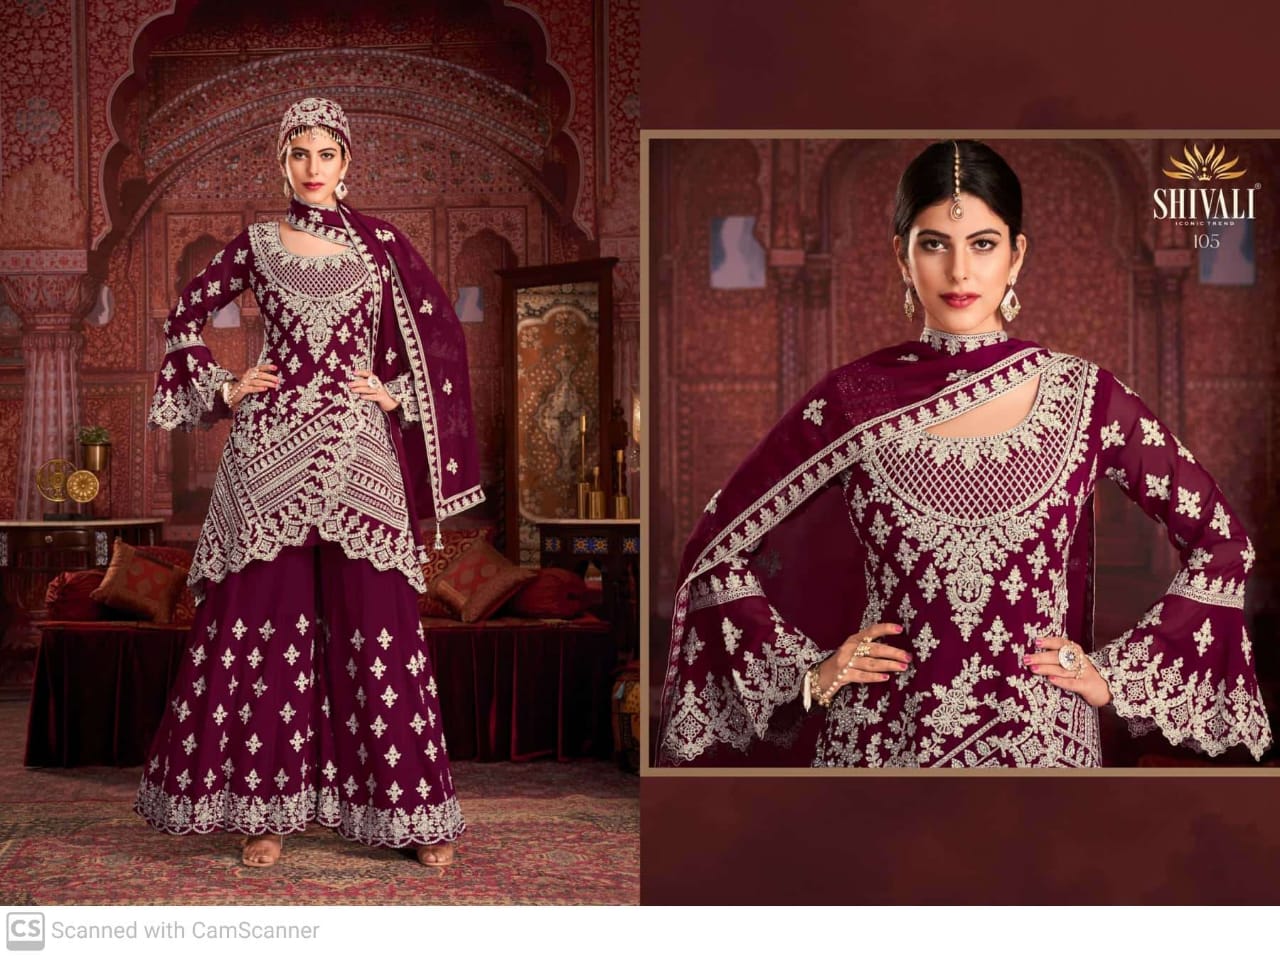 Shivali Fashion Halime Sultan 105